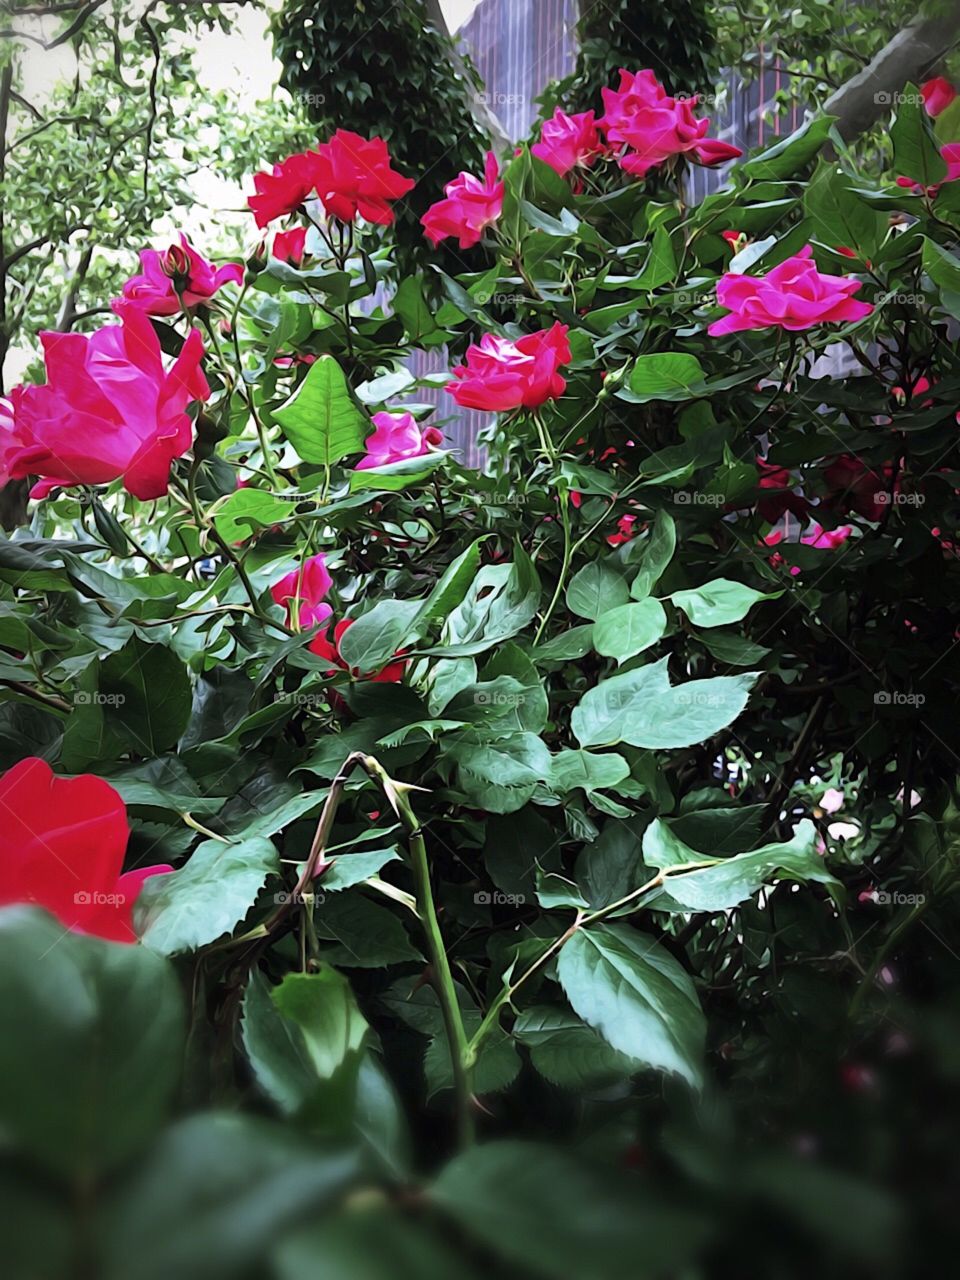 Nature/Landscape/Flowers, Red Roses - Dewitt Clinton Park, Manhattan, New York City. Instagram,@PennyPeronto